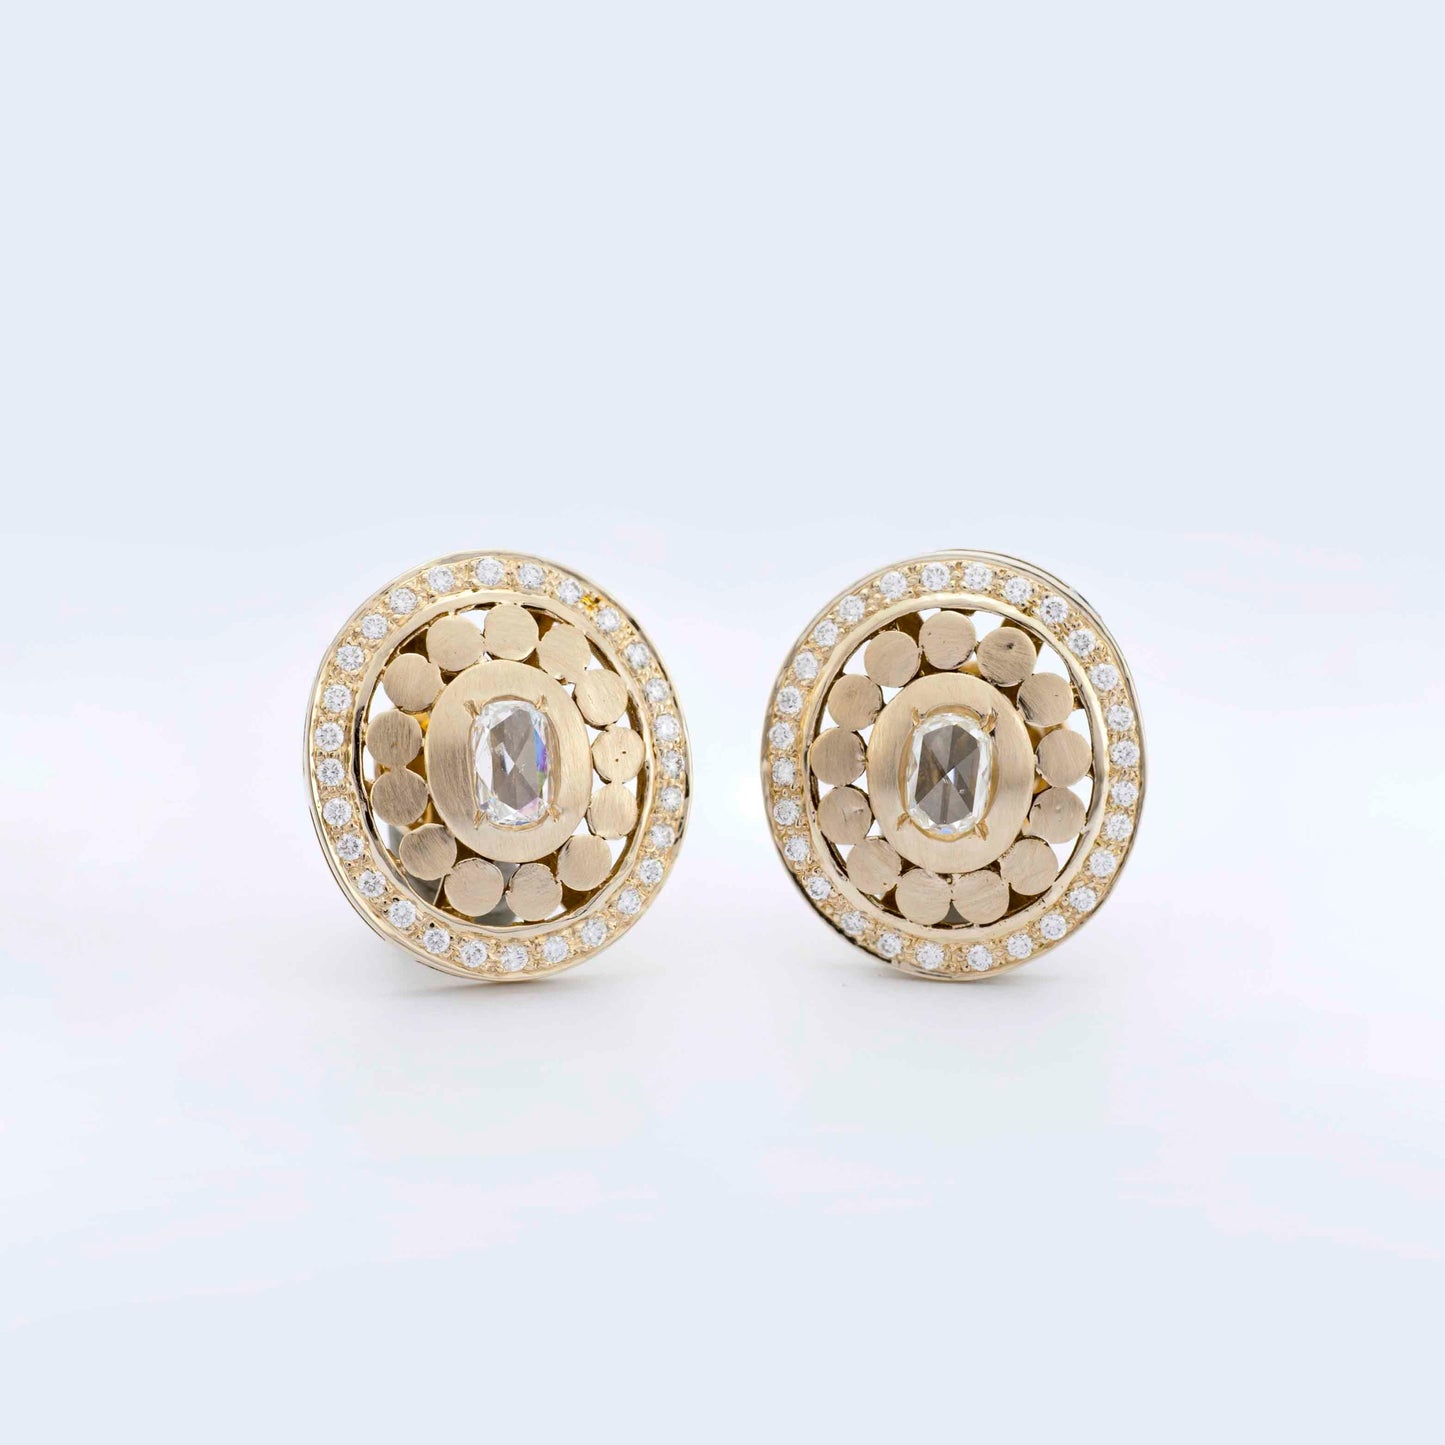 The Charukesi Gold and Diamond Ear Studs by Rasvihar